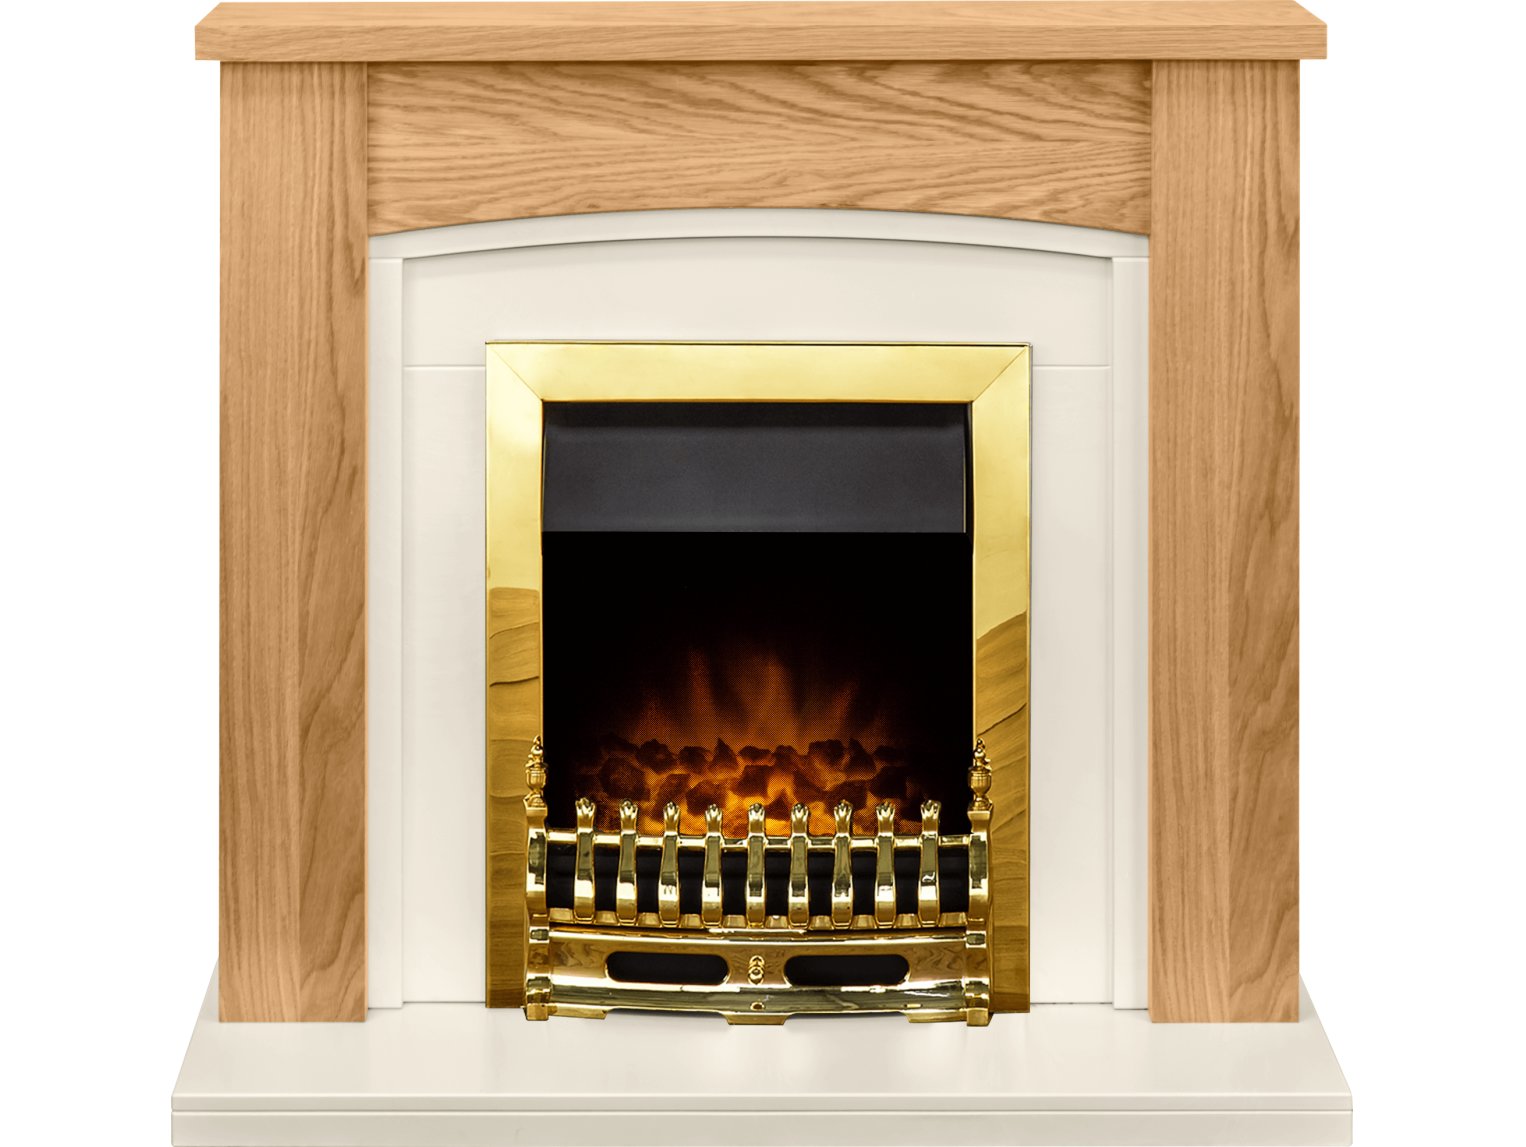 Adam Chilton Fireplace Suite in Oak with Blenheim Electric Fire in Brass, 39 Inch